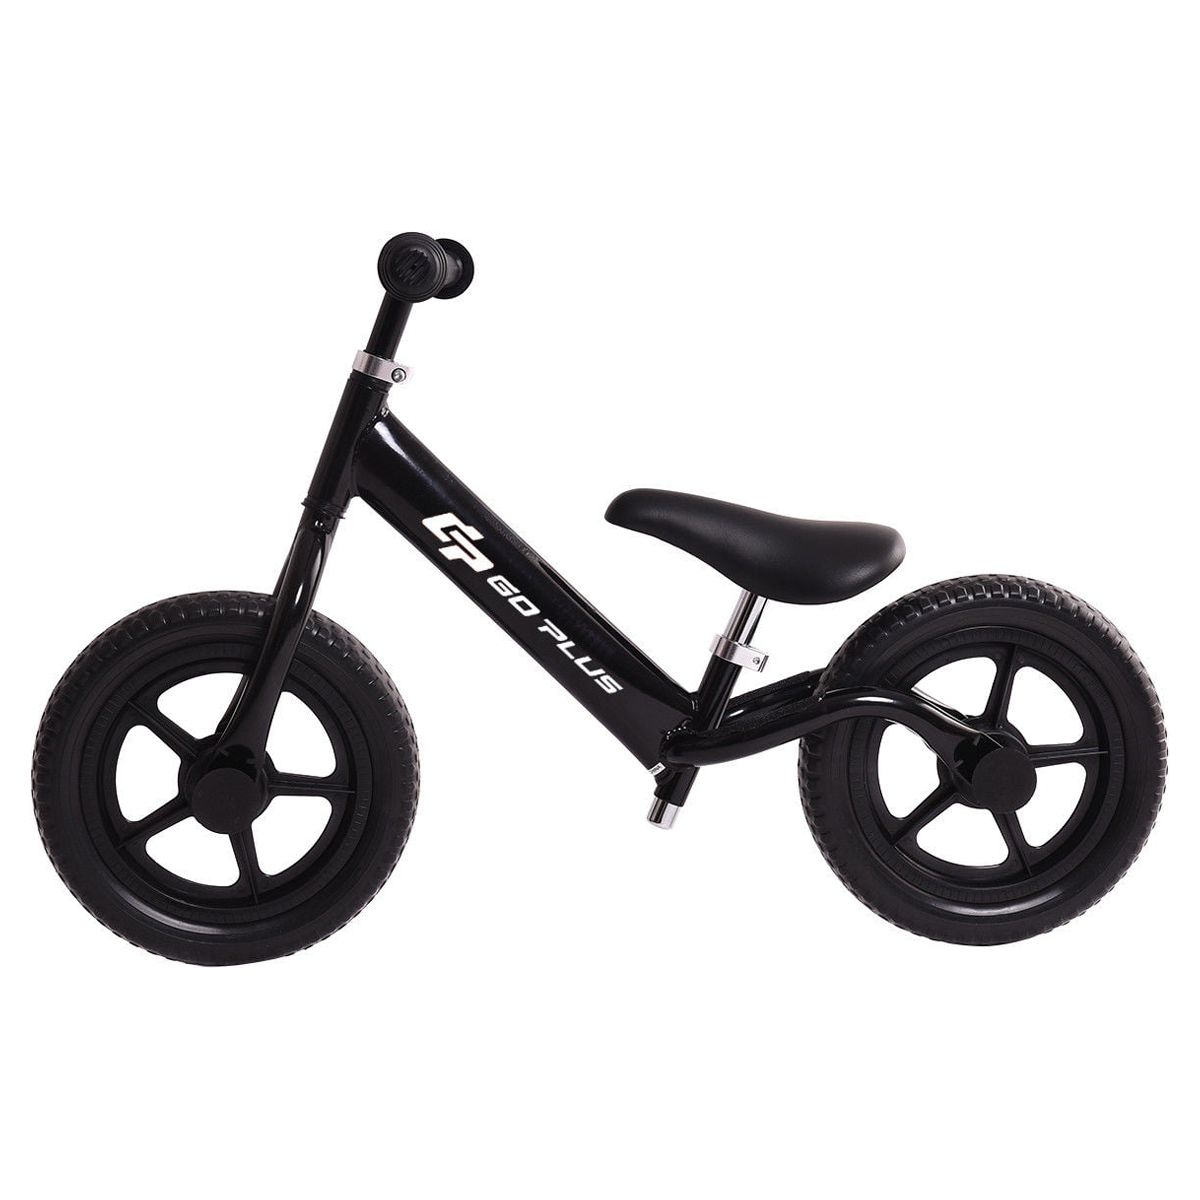 Goplus 12'' Balance Bike Classic Kids No-Pedal Learn To Ride Pre Bike w/ Adjustable Seat, Black - image 3 of 8